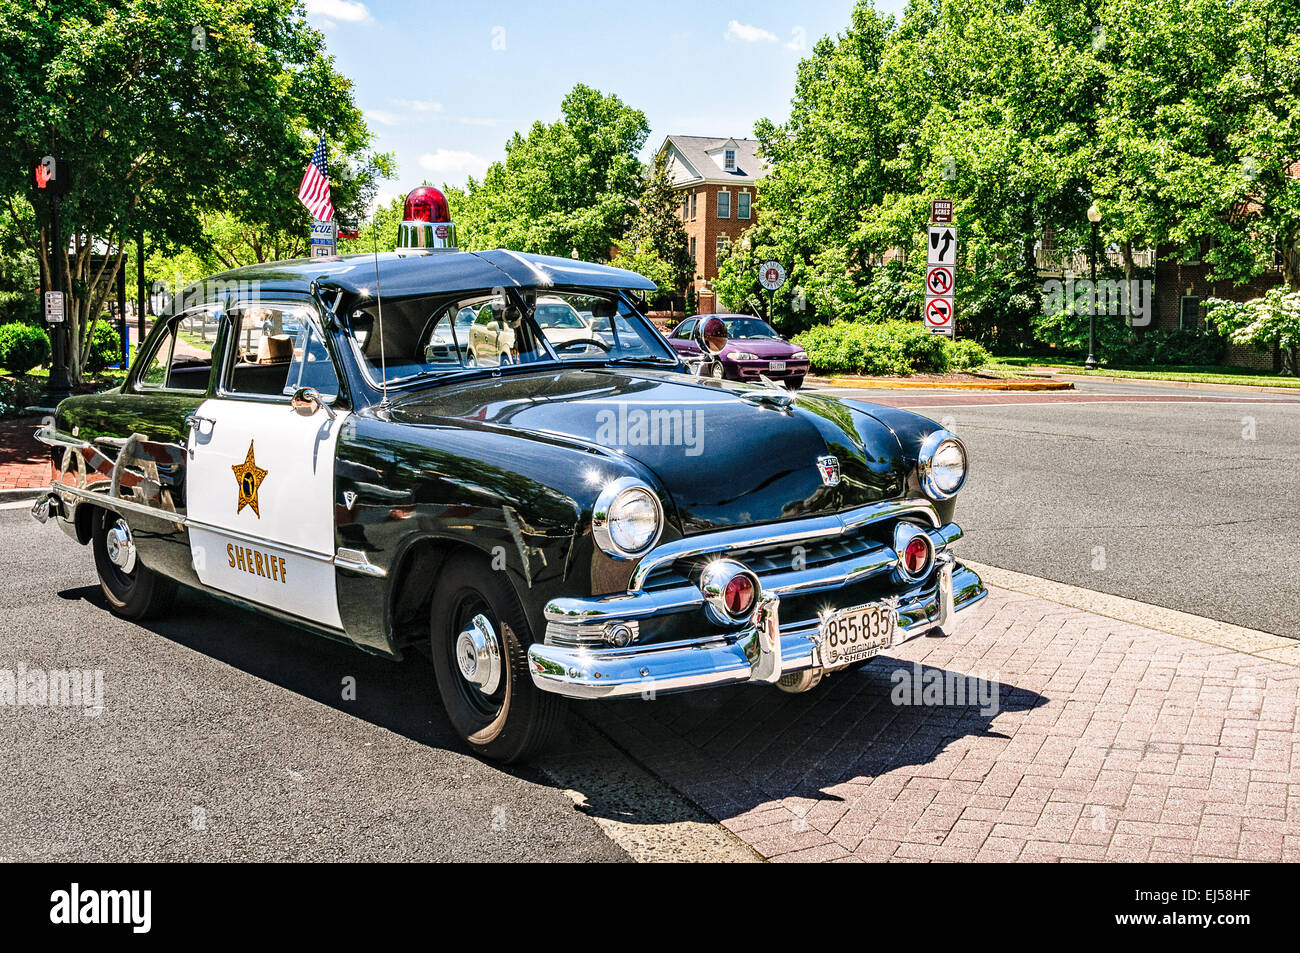 Antique Police Car Stock Photos & Antique Police Car Stock Images - Alamy